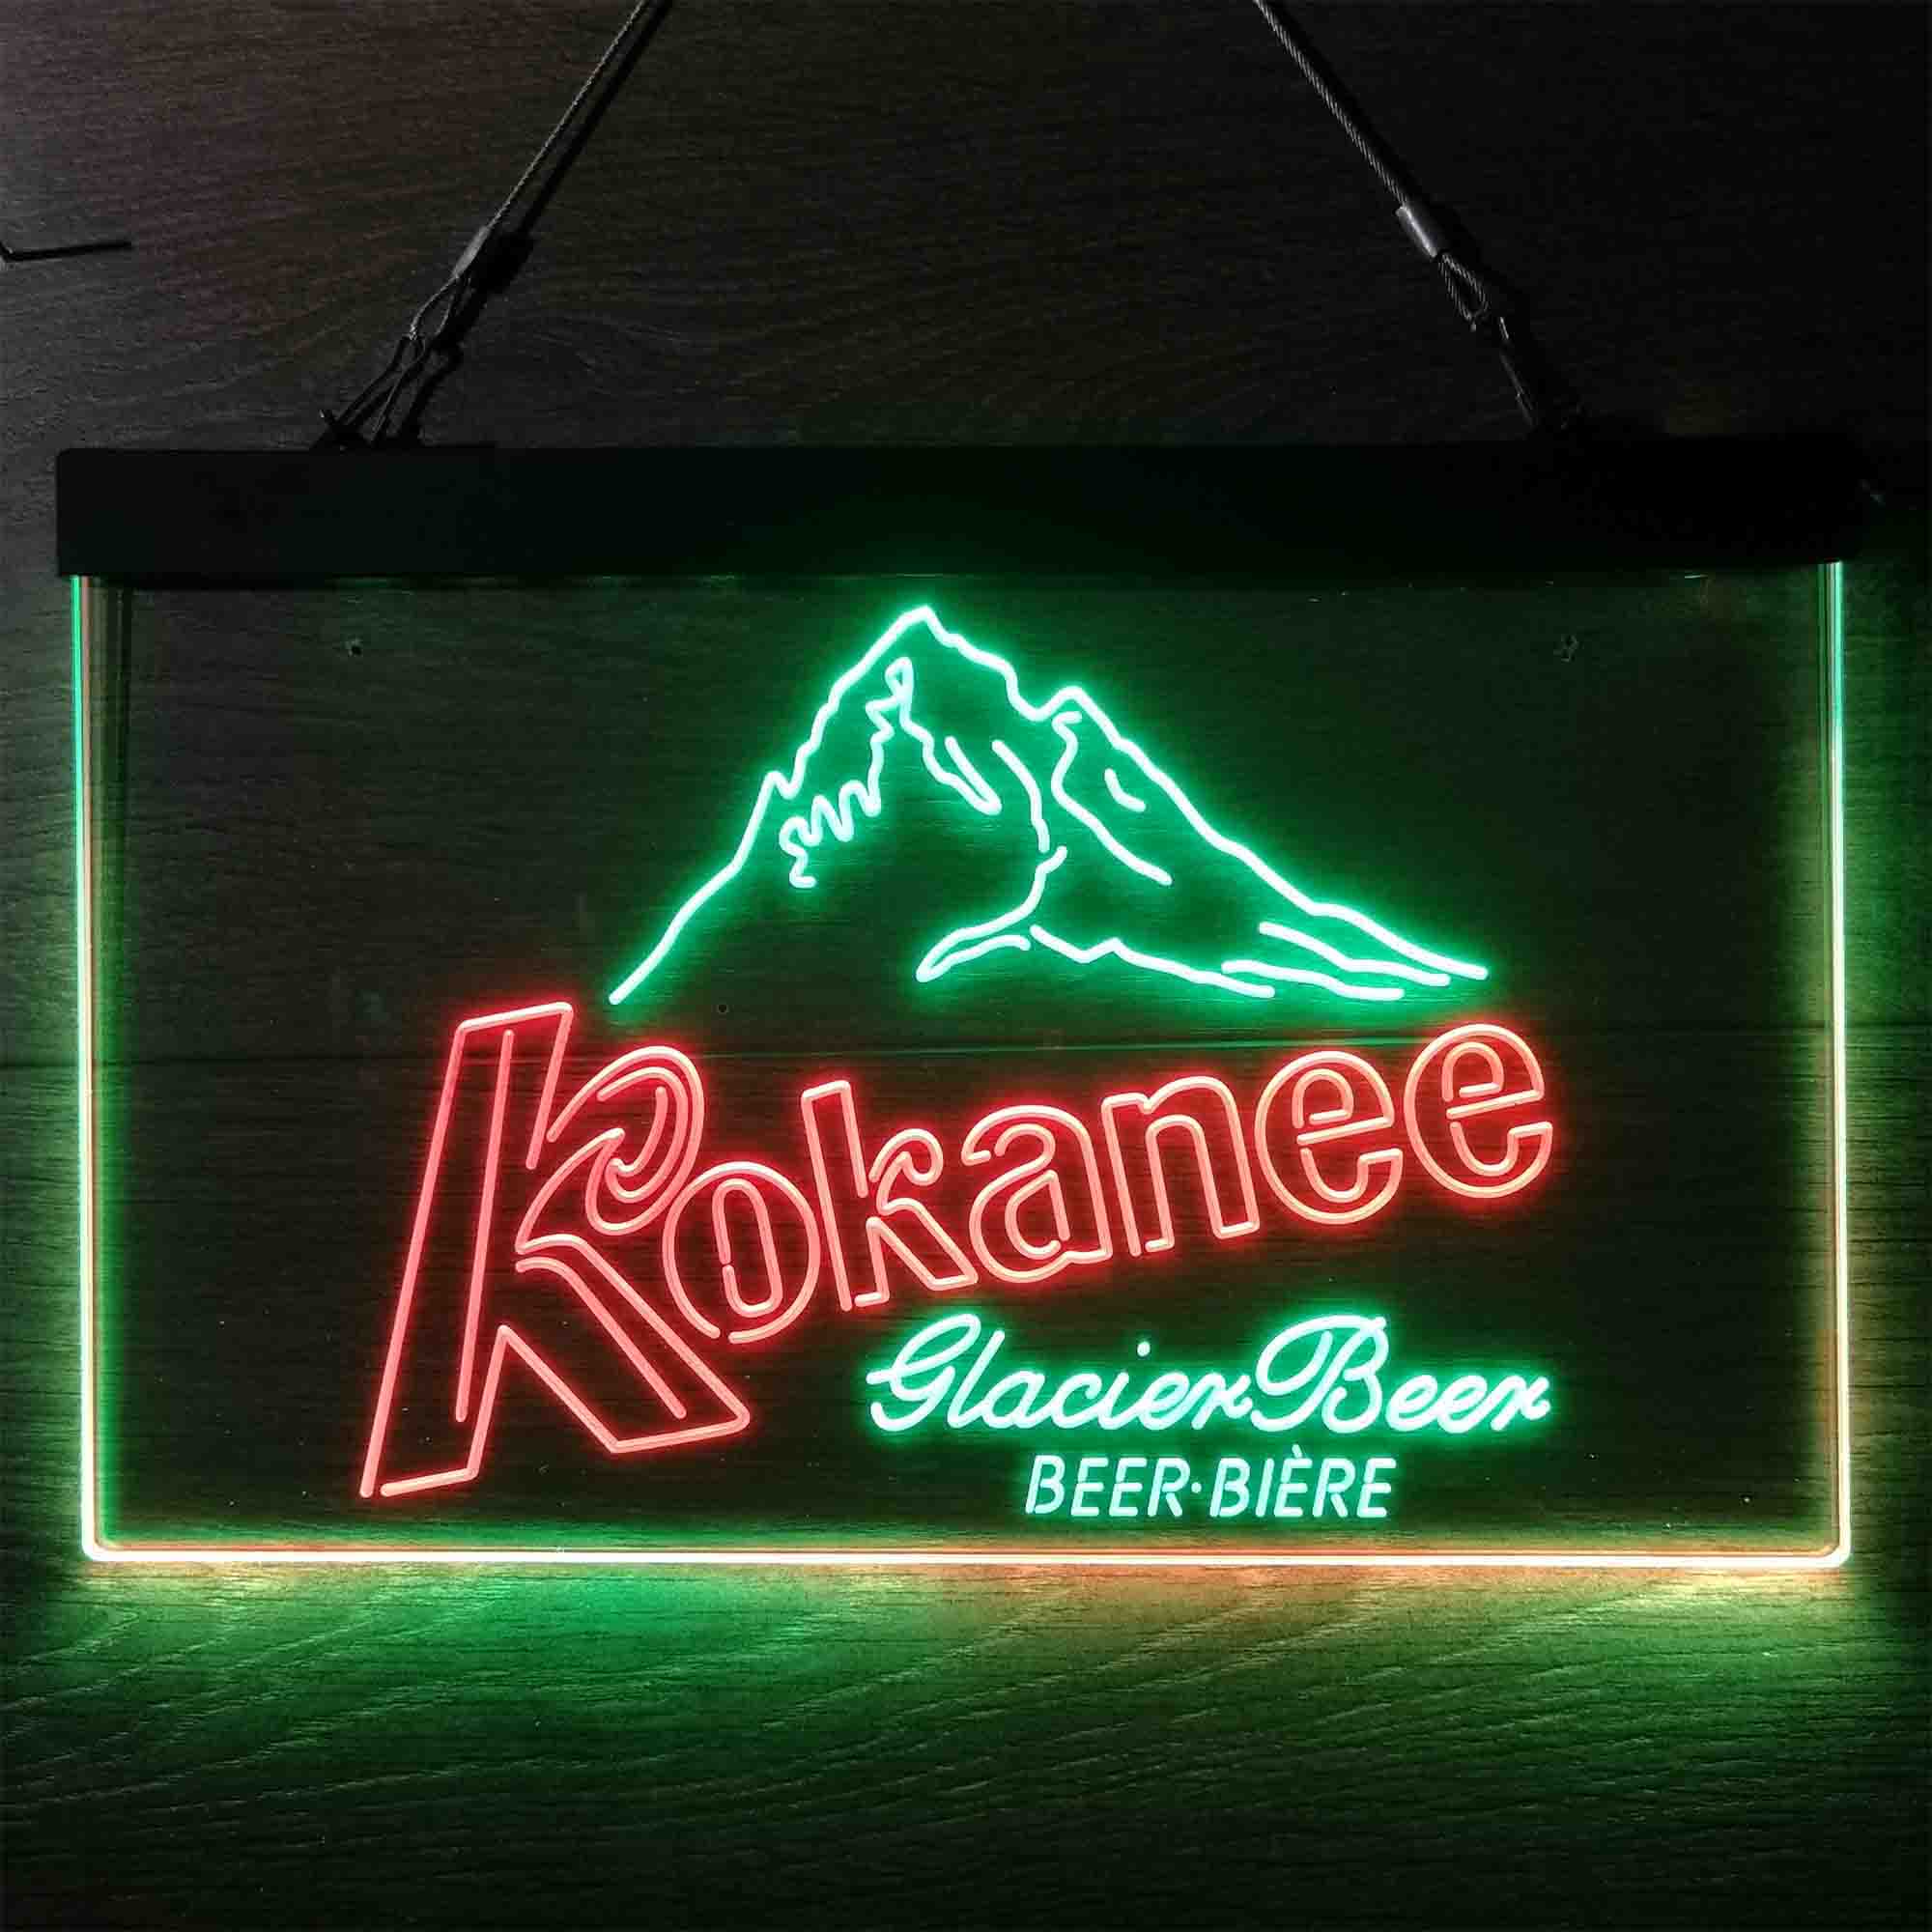 Kokanee Glacier Beer Neon-Like LED Sign